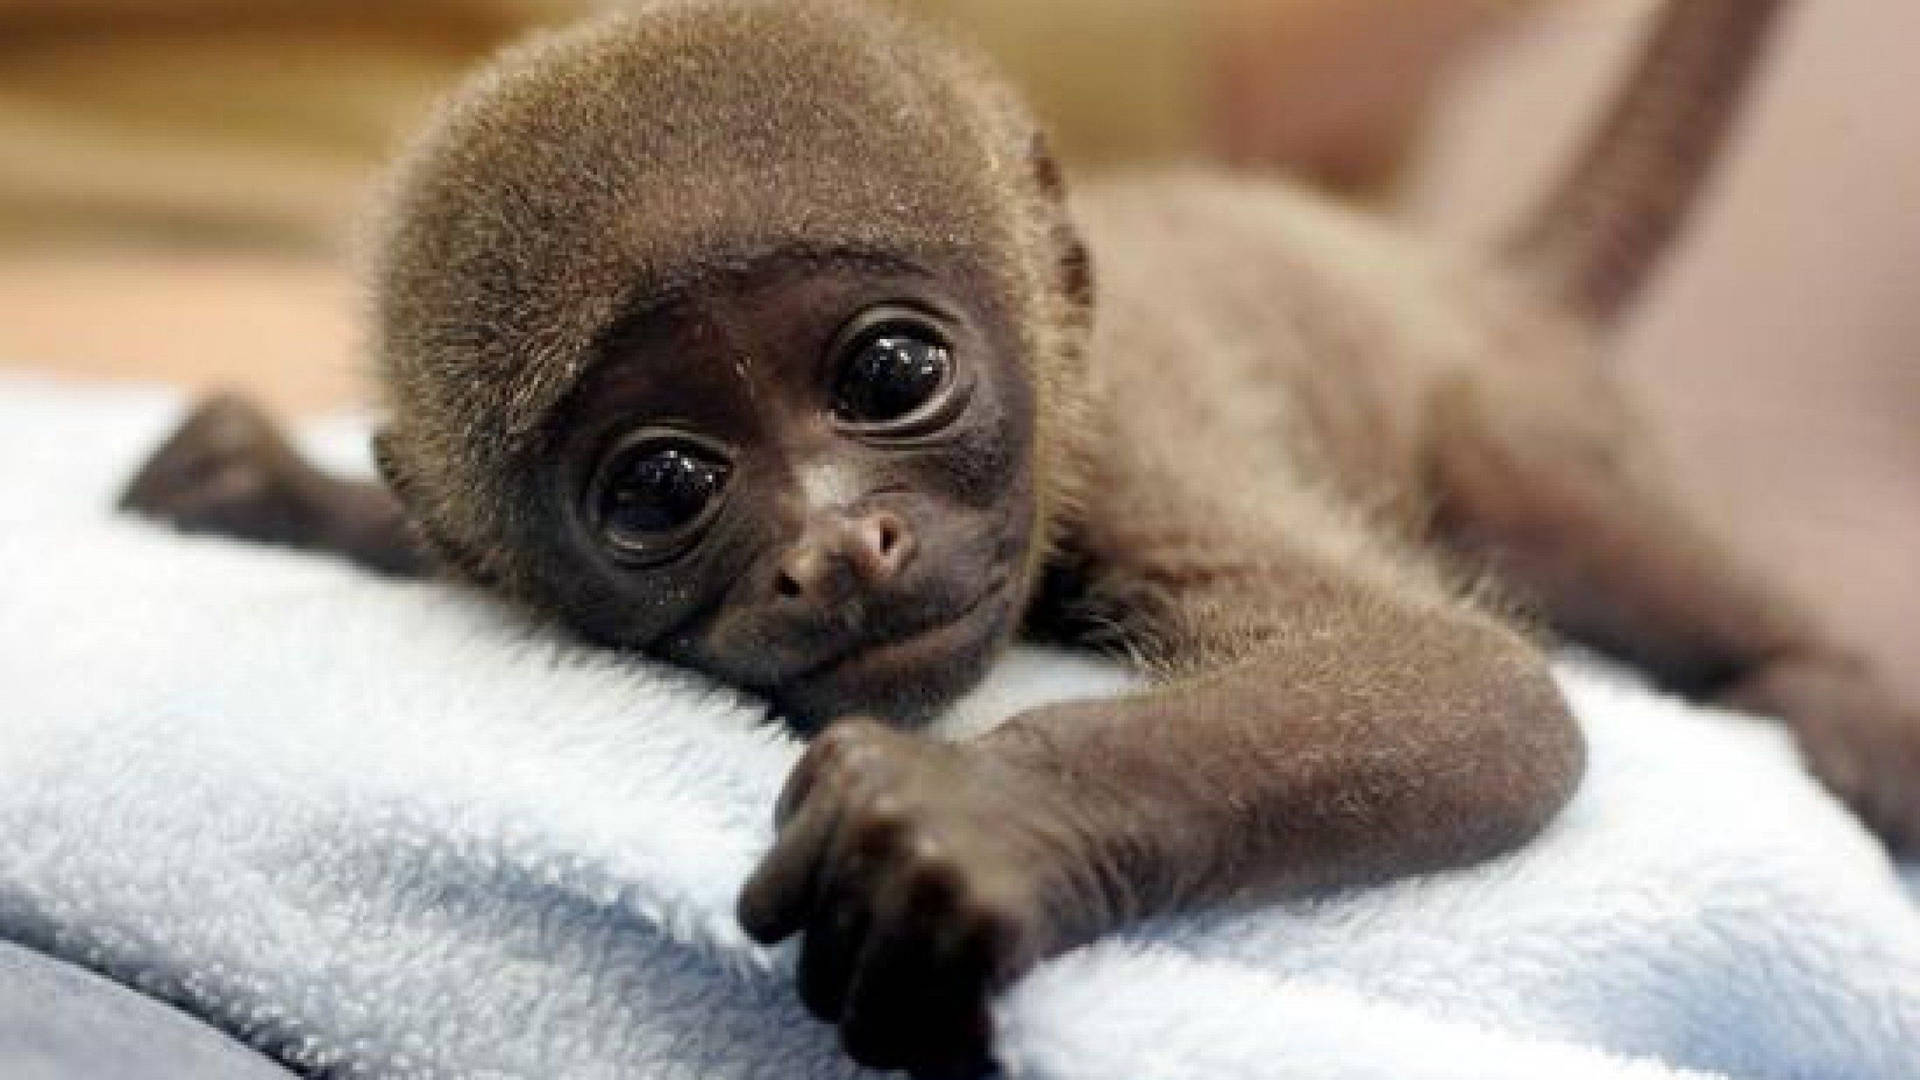 Cute Monkey Resting On A Towel